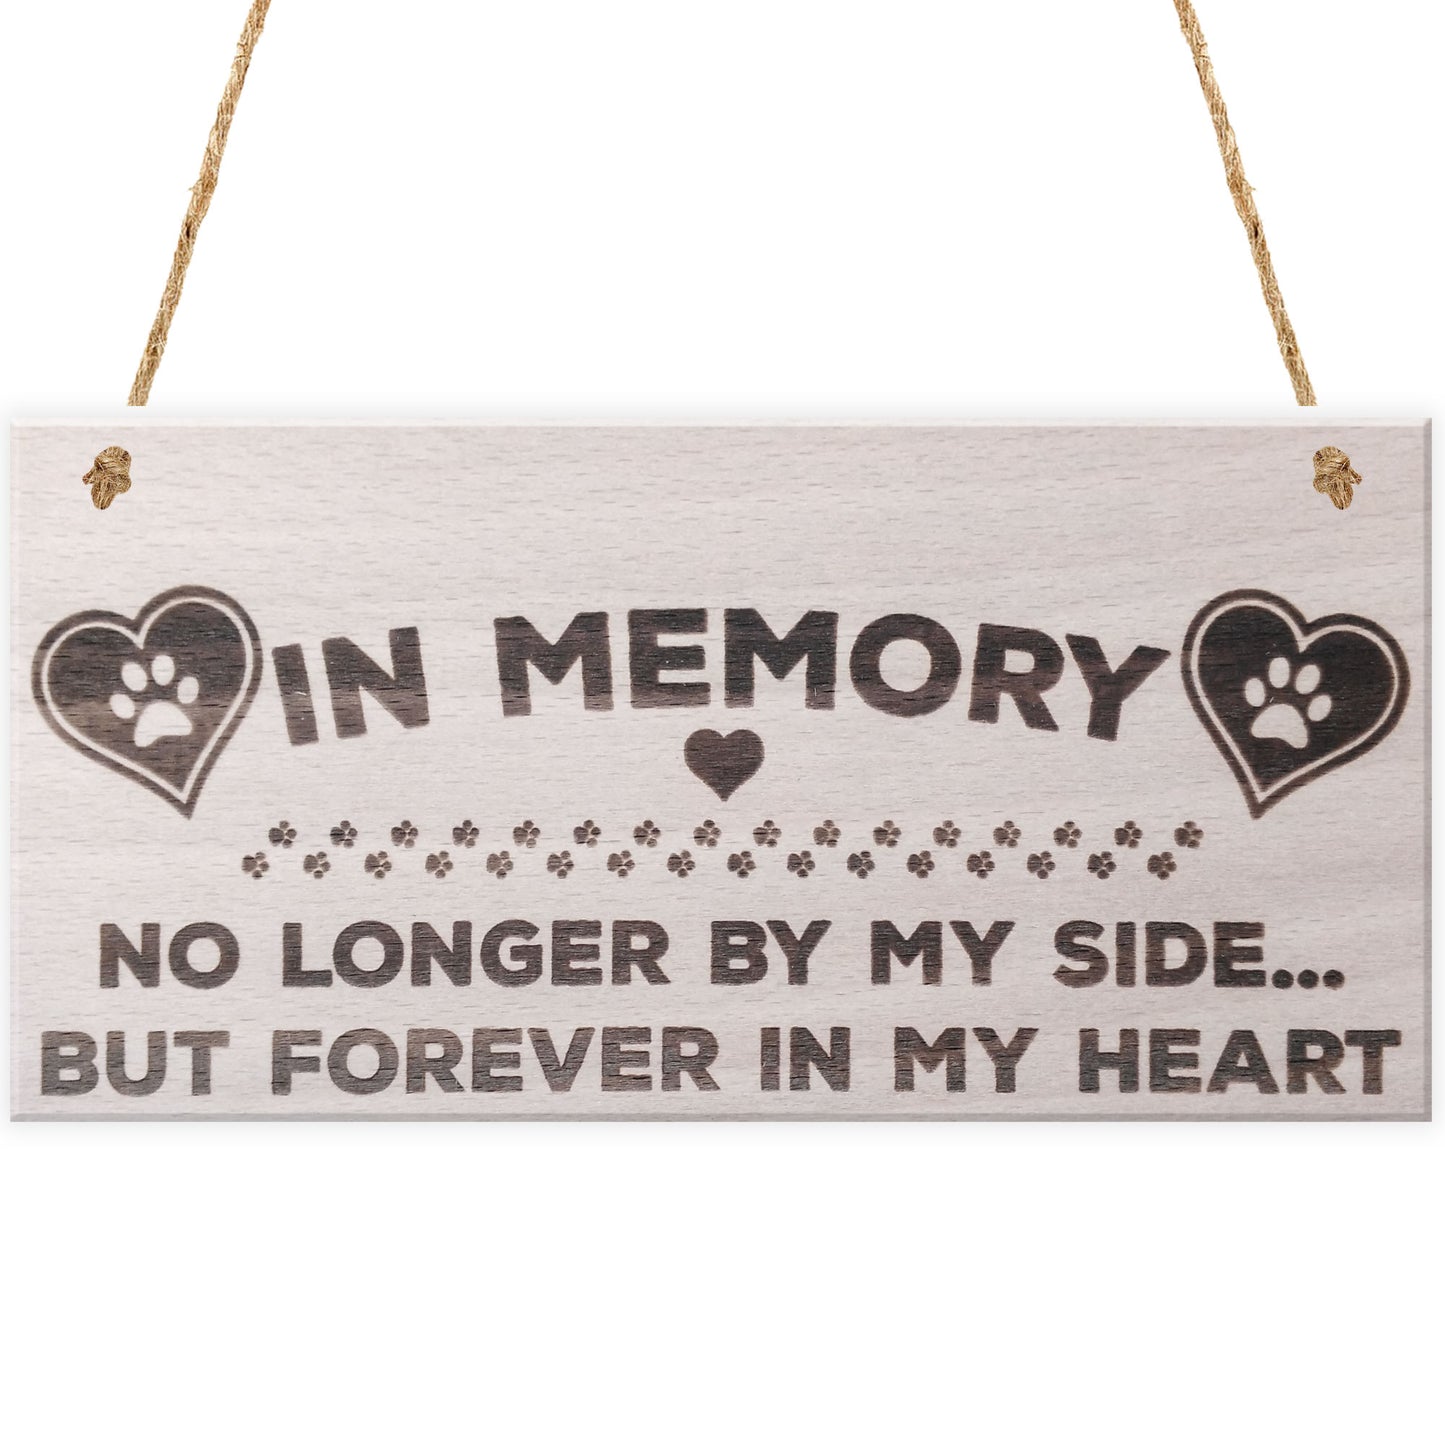 In Memory Pet Memorial Plaque Wooden Hanging Paw Prints Sign